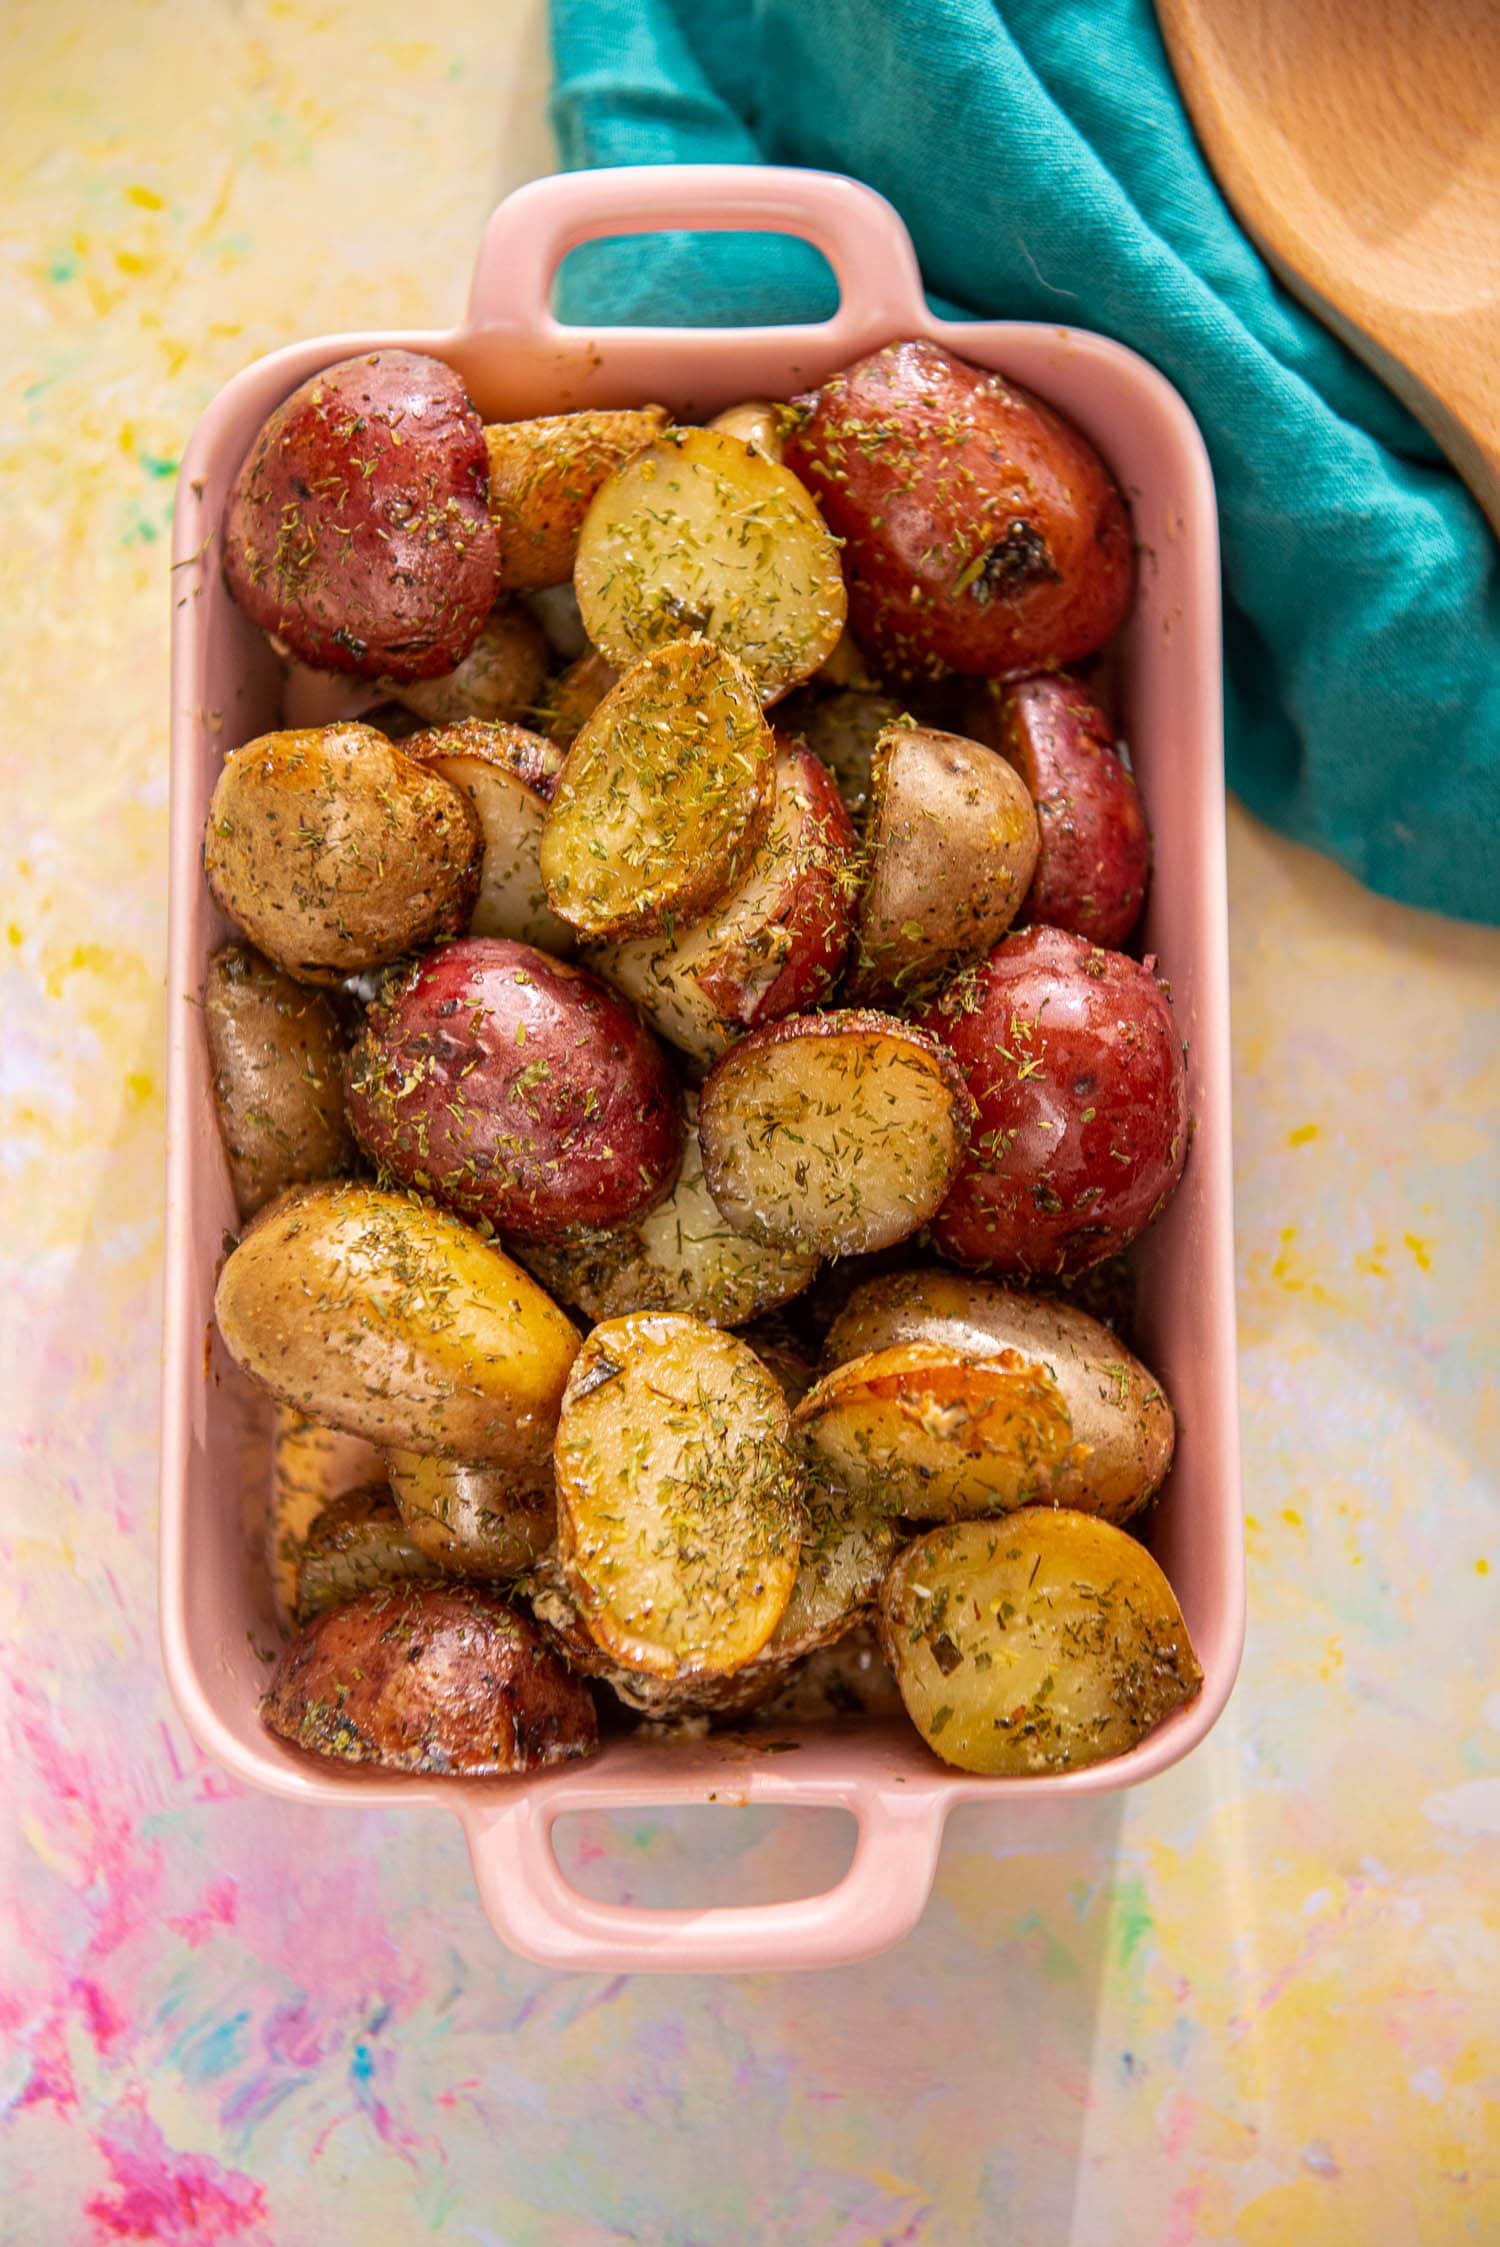 Slow Cooker Ranch Potatoes